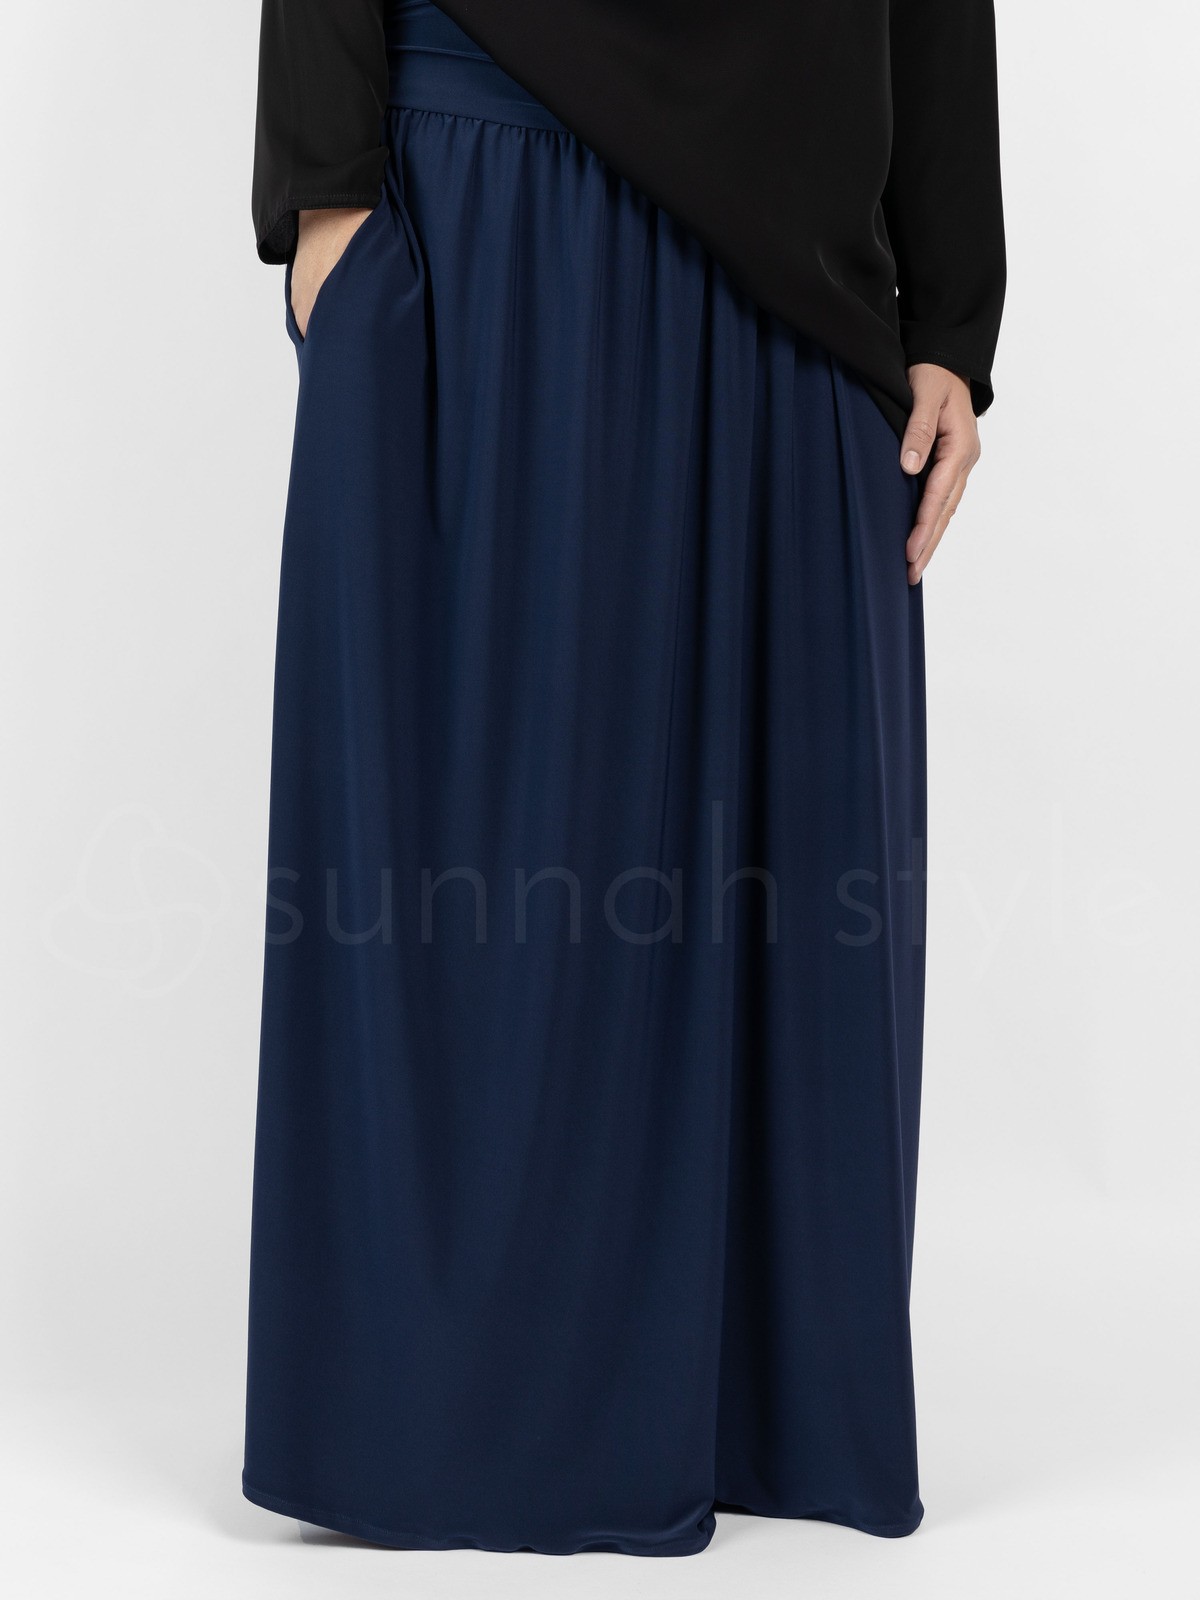 Sunnah Style - Jersey Maxi Skirt (Navy Blue)